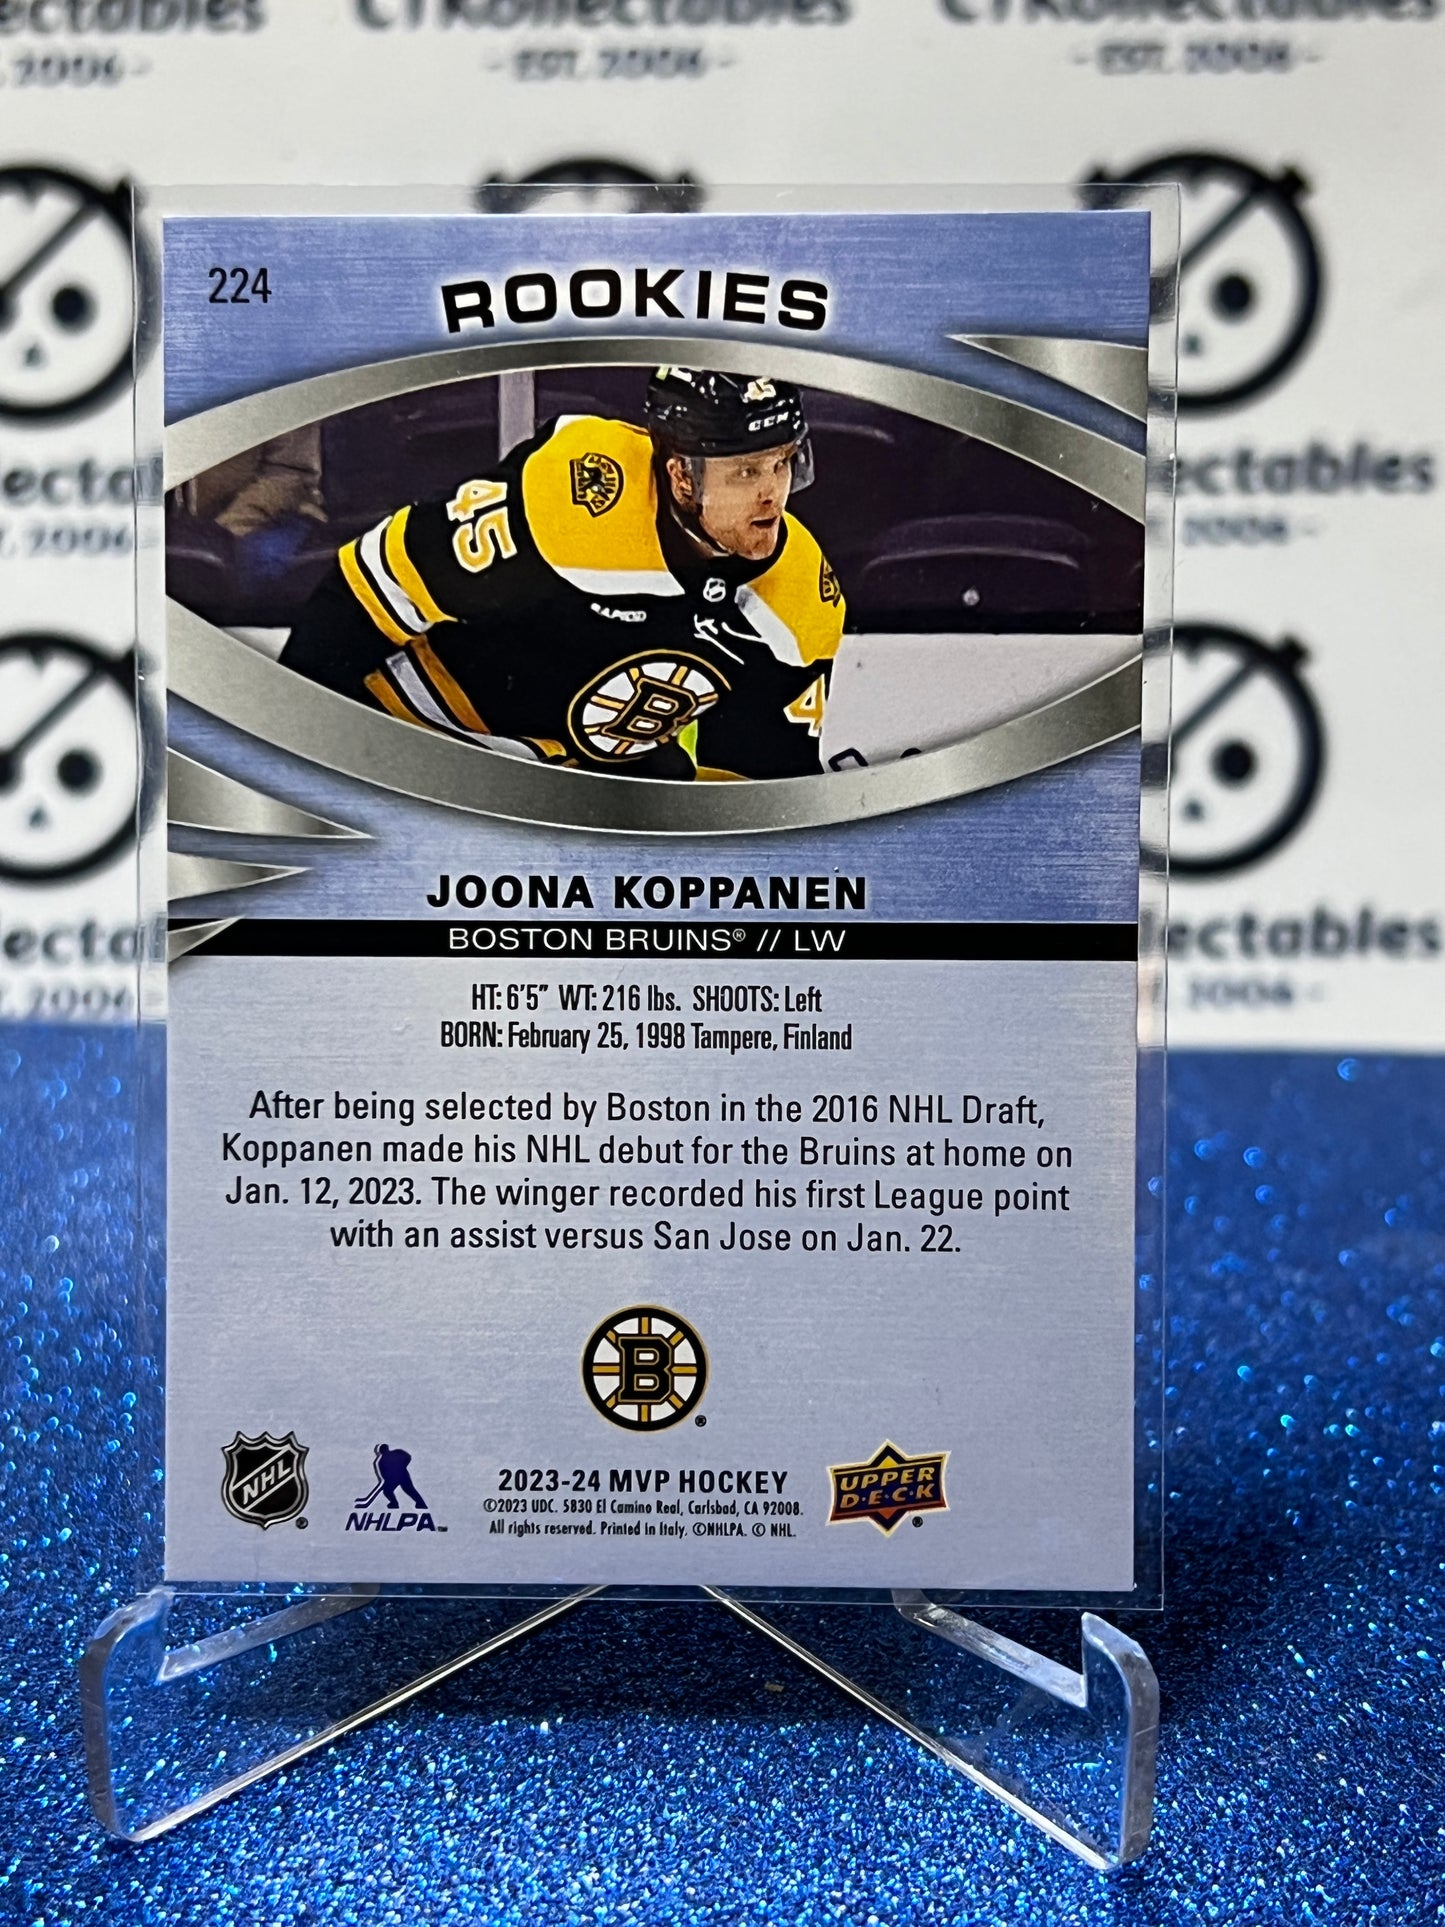 2023-24 UPPER DECK MVP JOONA KOPPANEN # 224 ROOKIE BOSTON BRUINS HOCKEY CARD